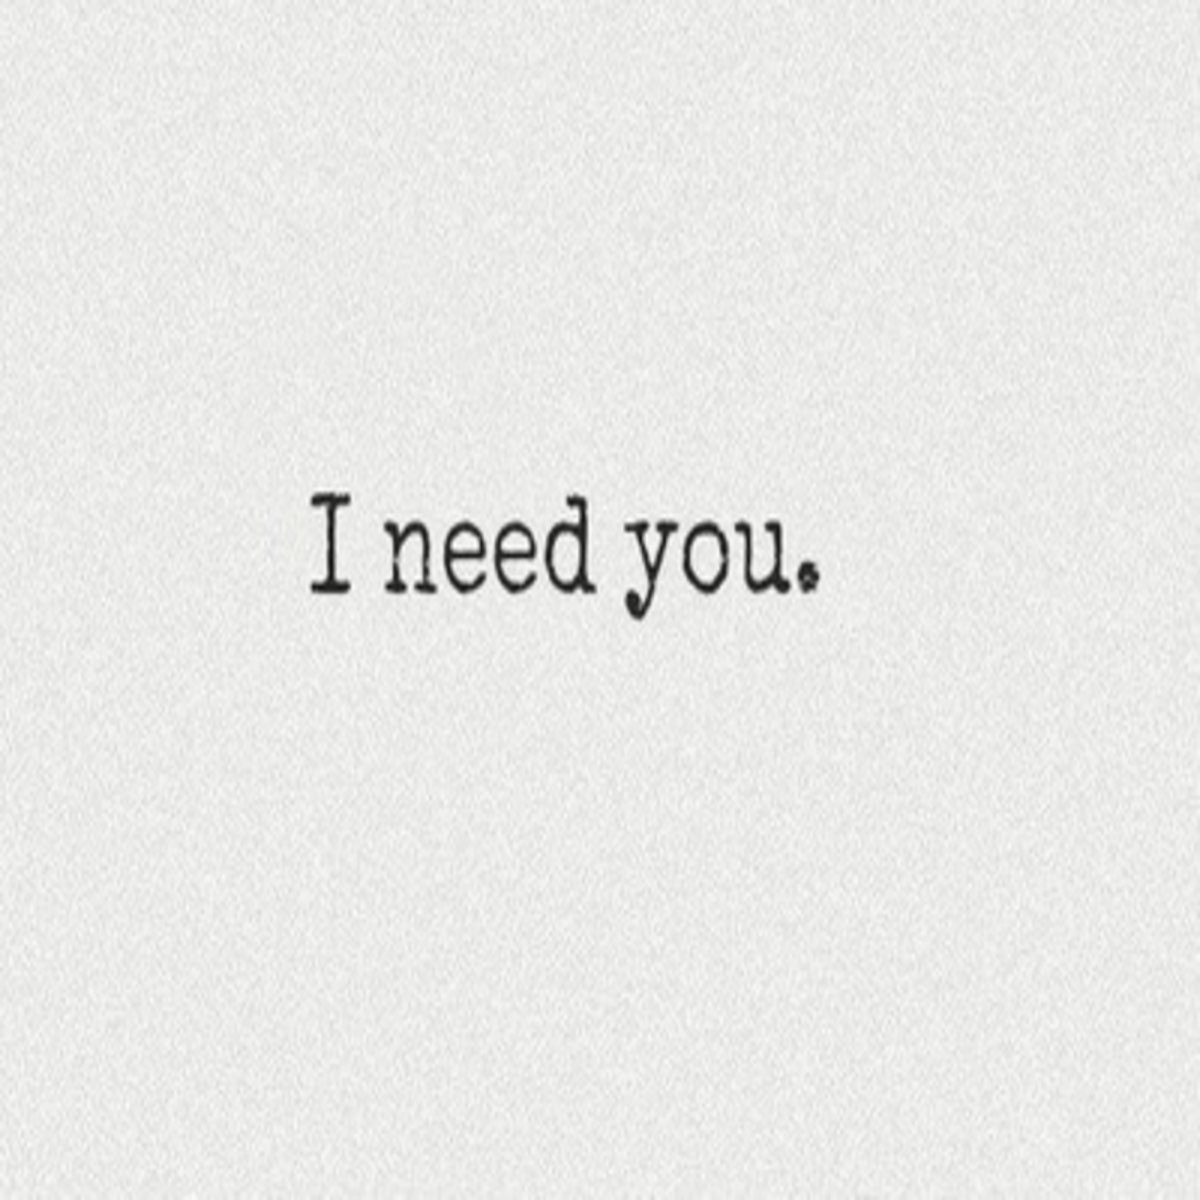 Need you here love. I need you. Надпись i need you. Песни i need you. Как переводится i need you.